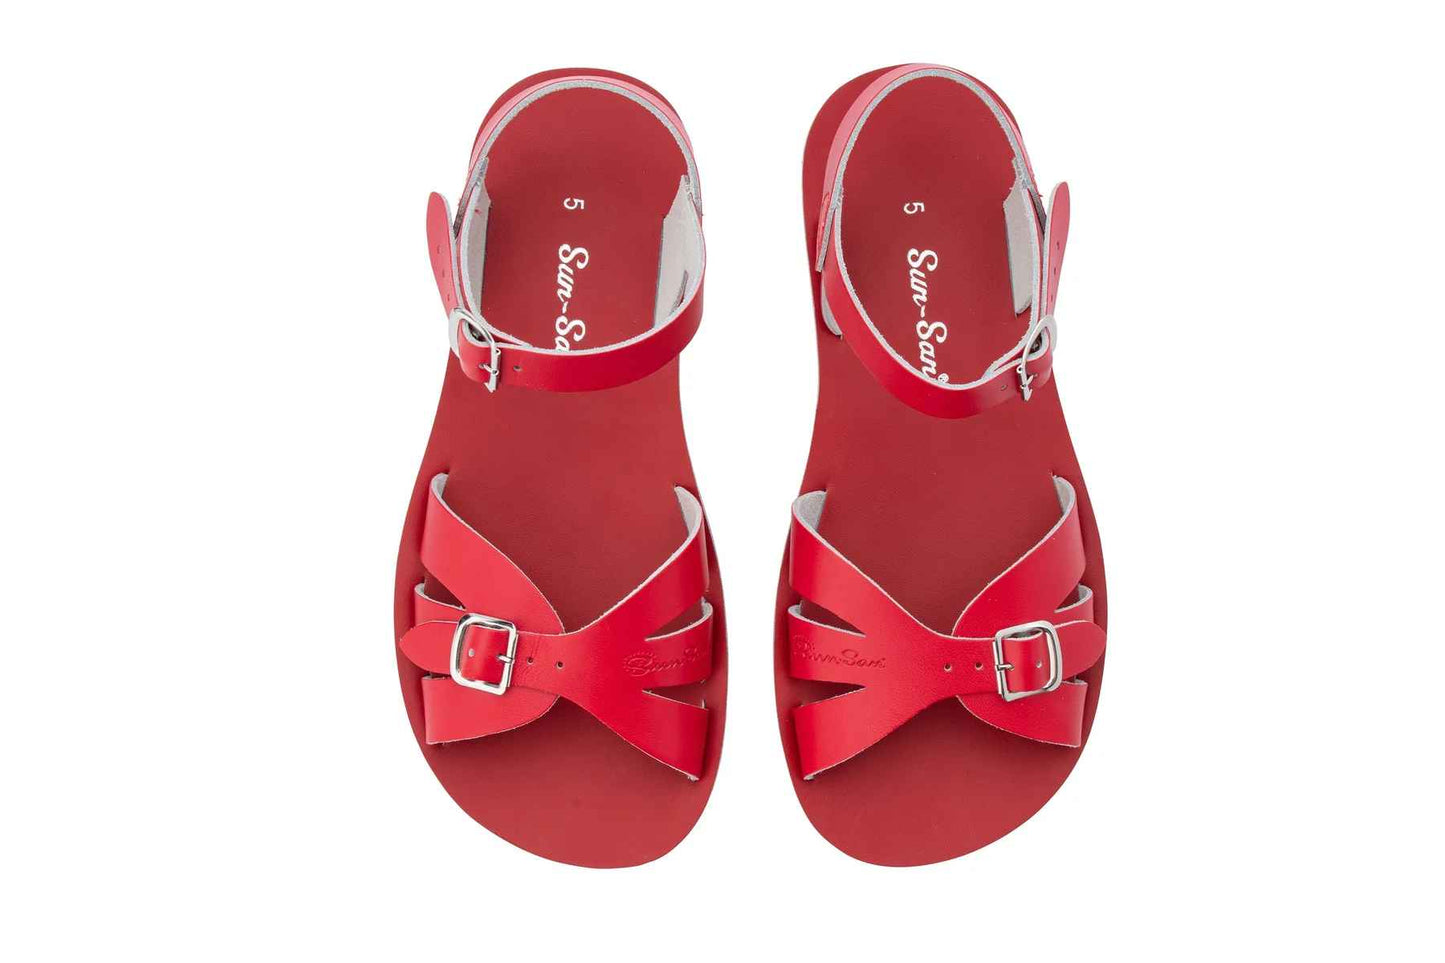 Sun-San "Boardwalk" Sandals - Red